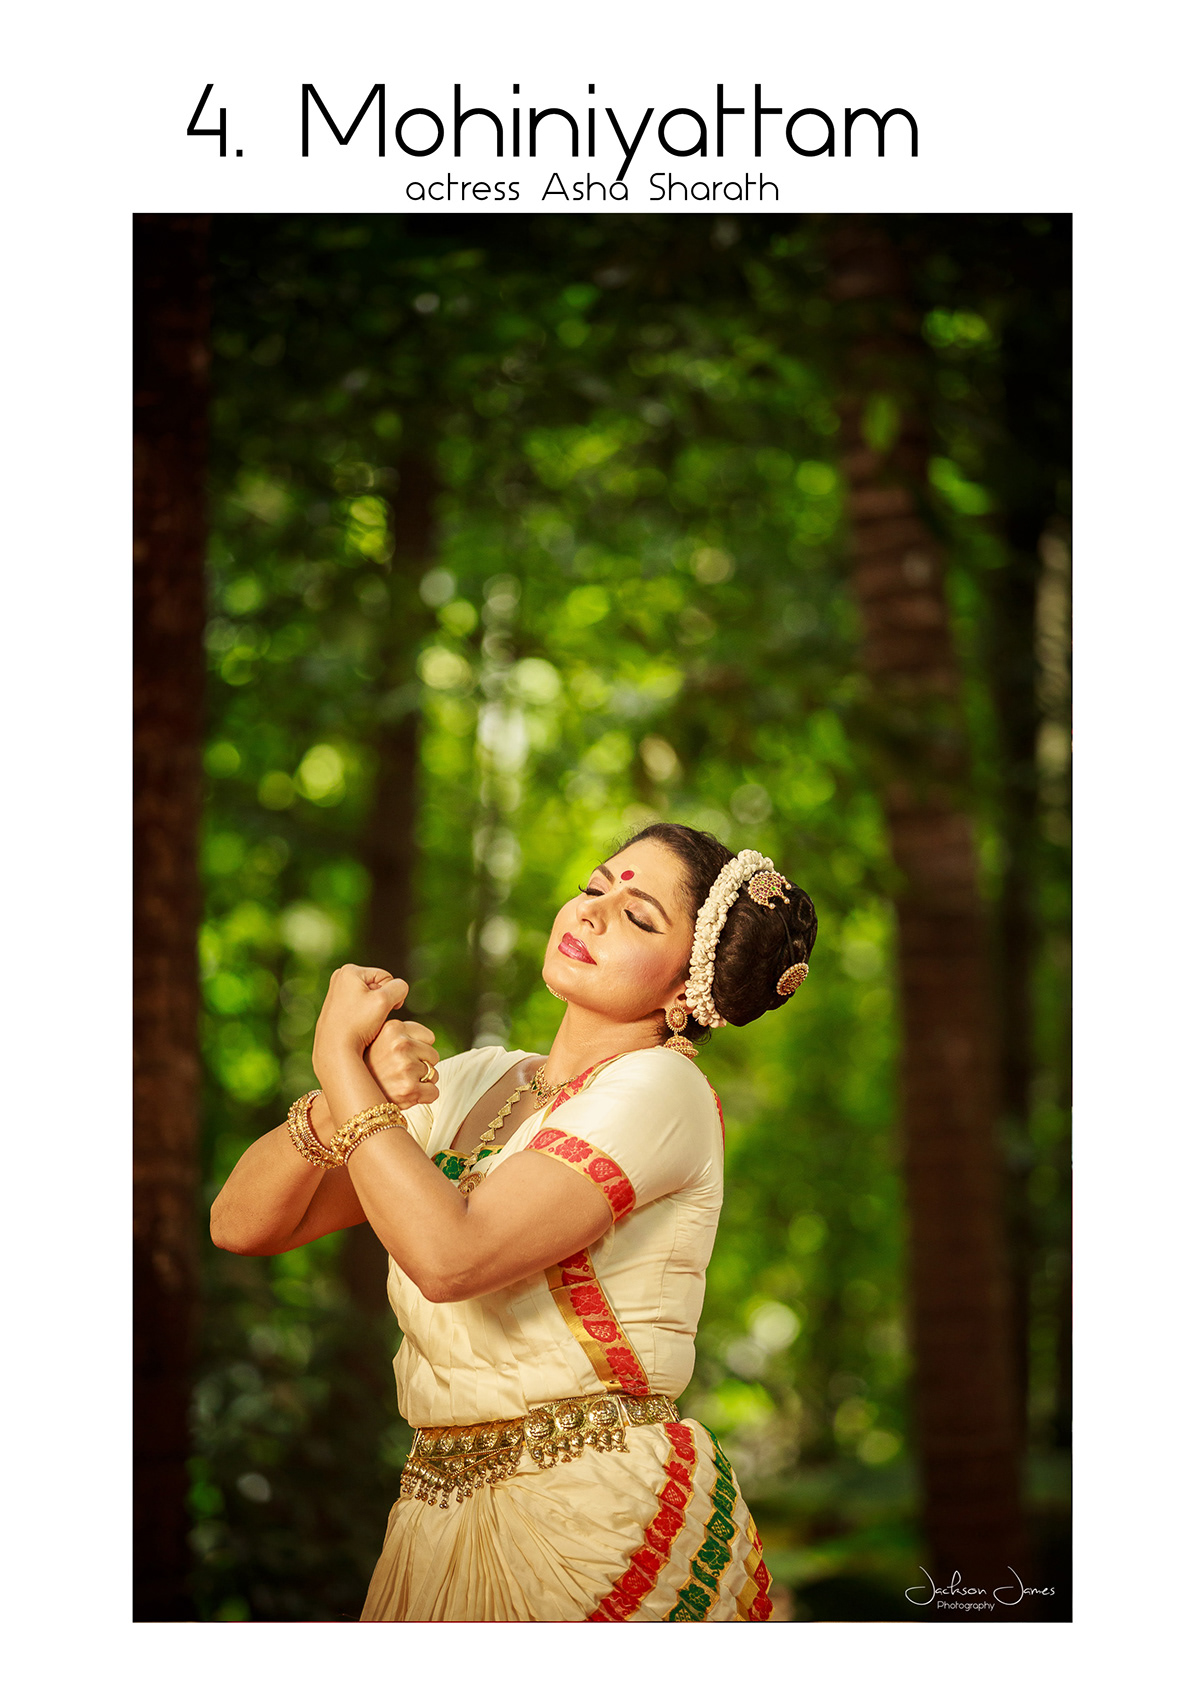 Portraiture India female jackson james Landscape birds Nature festivals